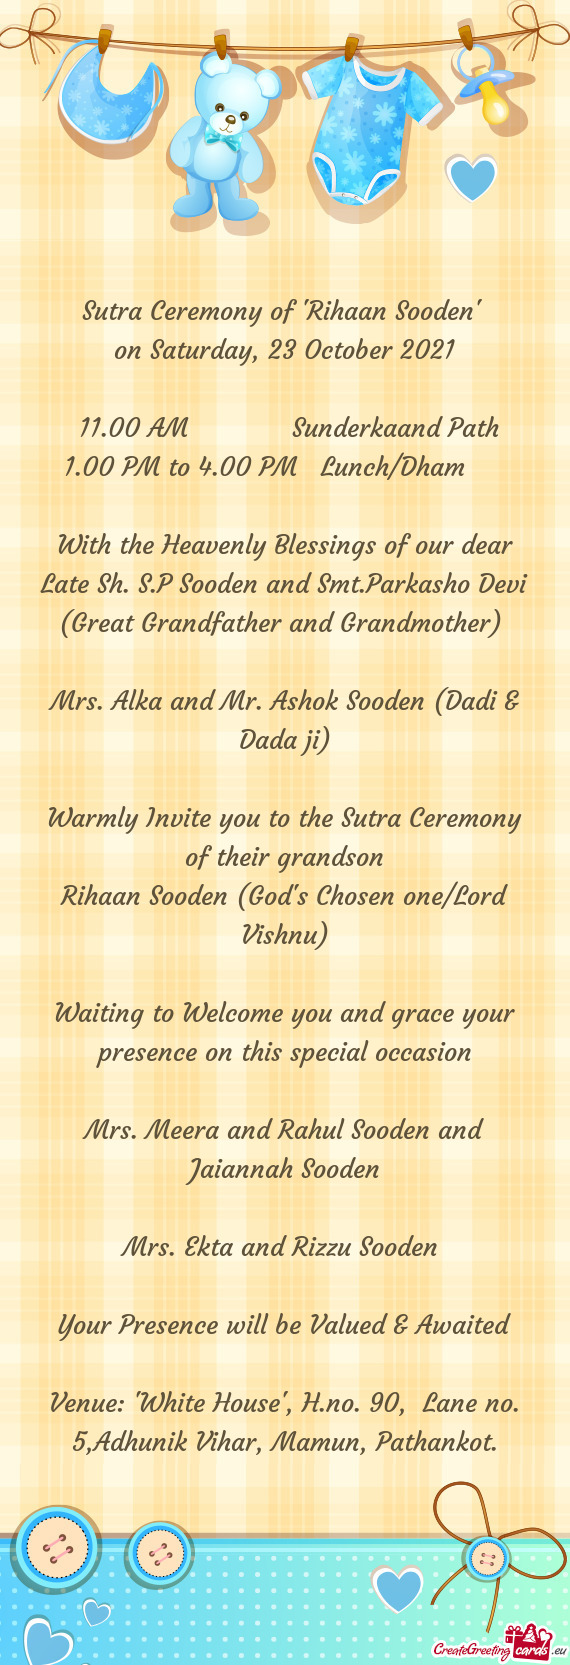 Sutra Ceremony of "Rihaan Sooden"